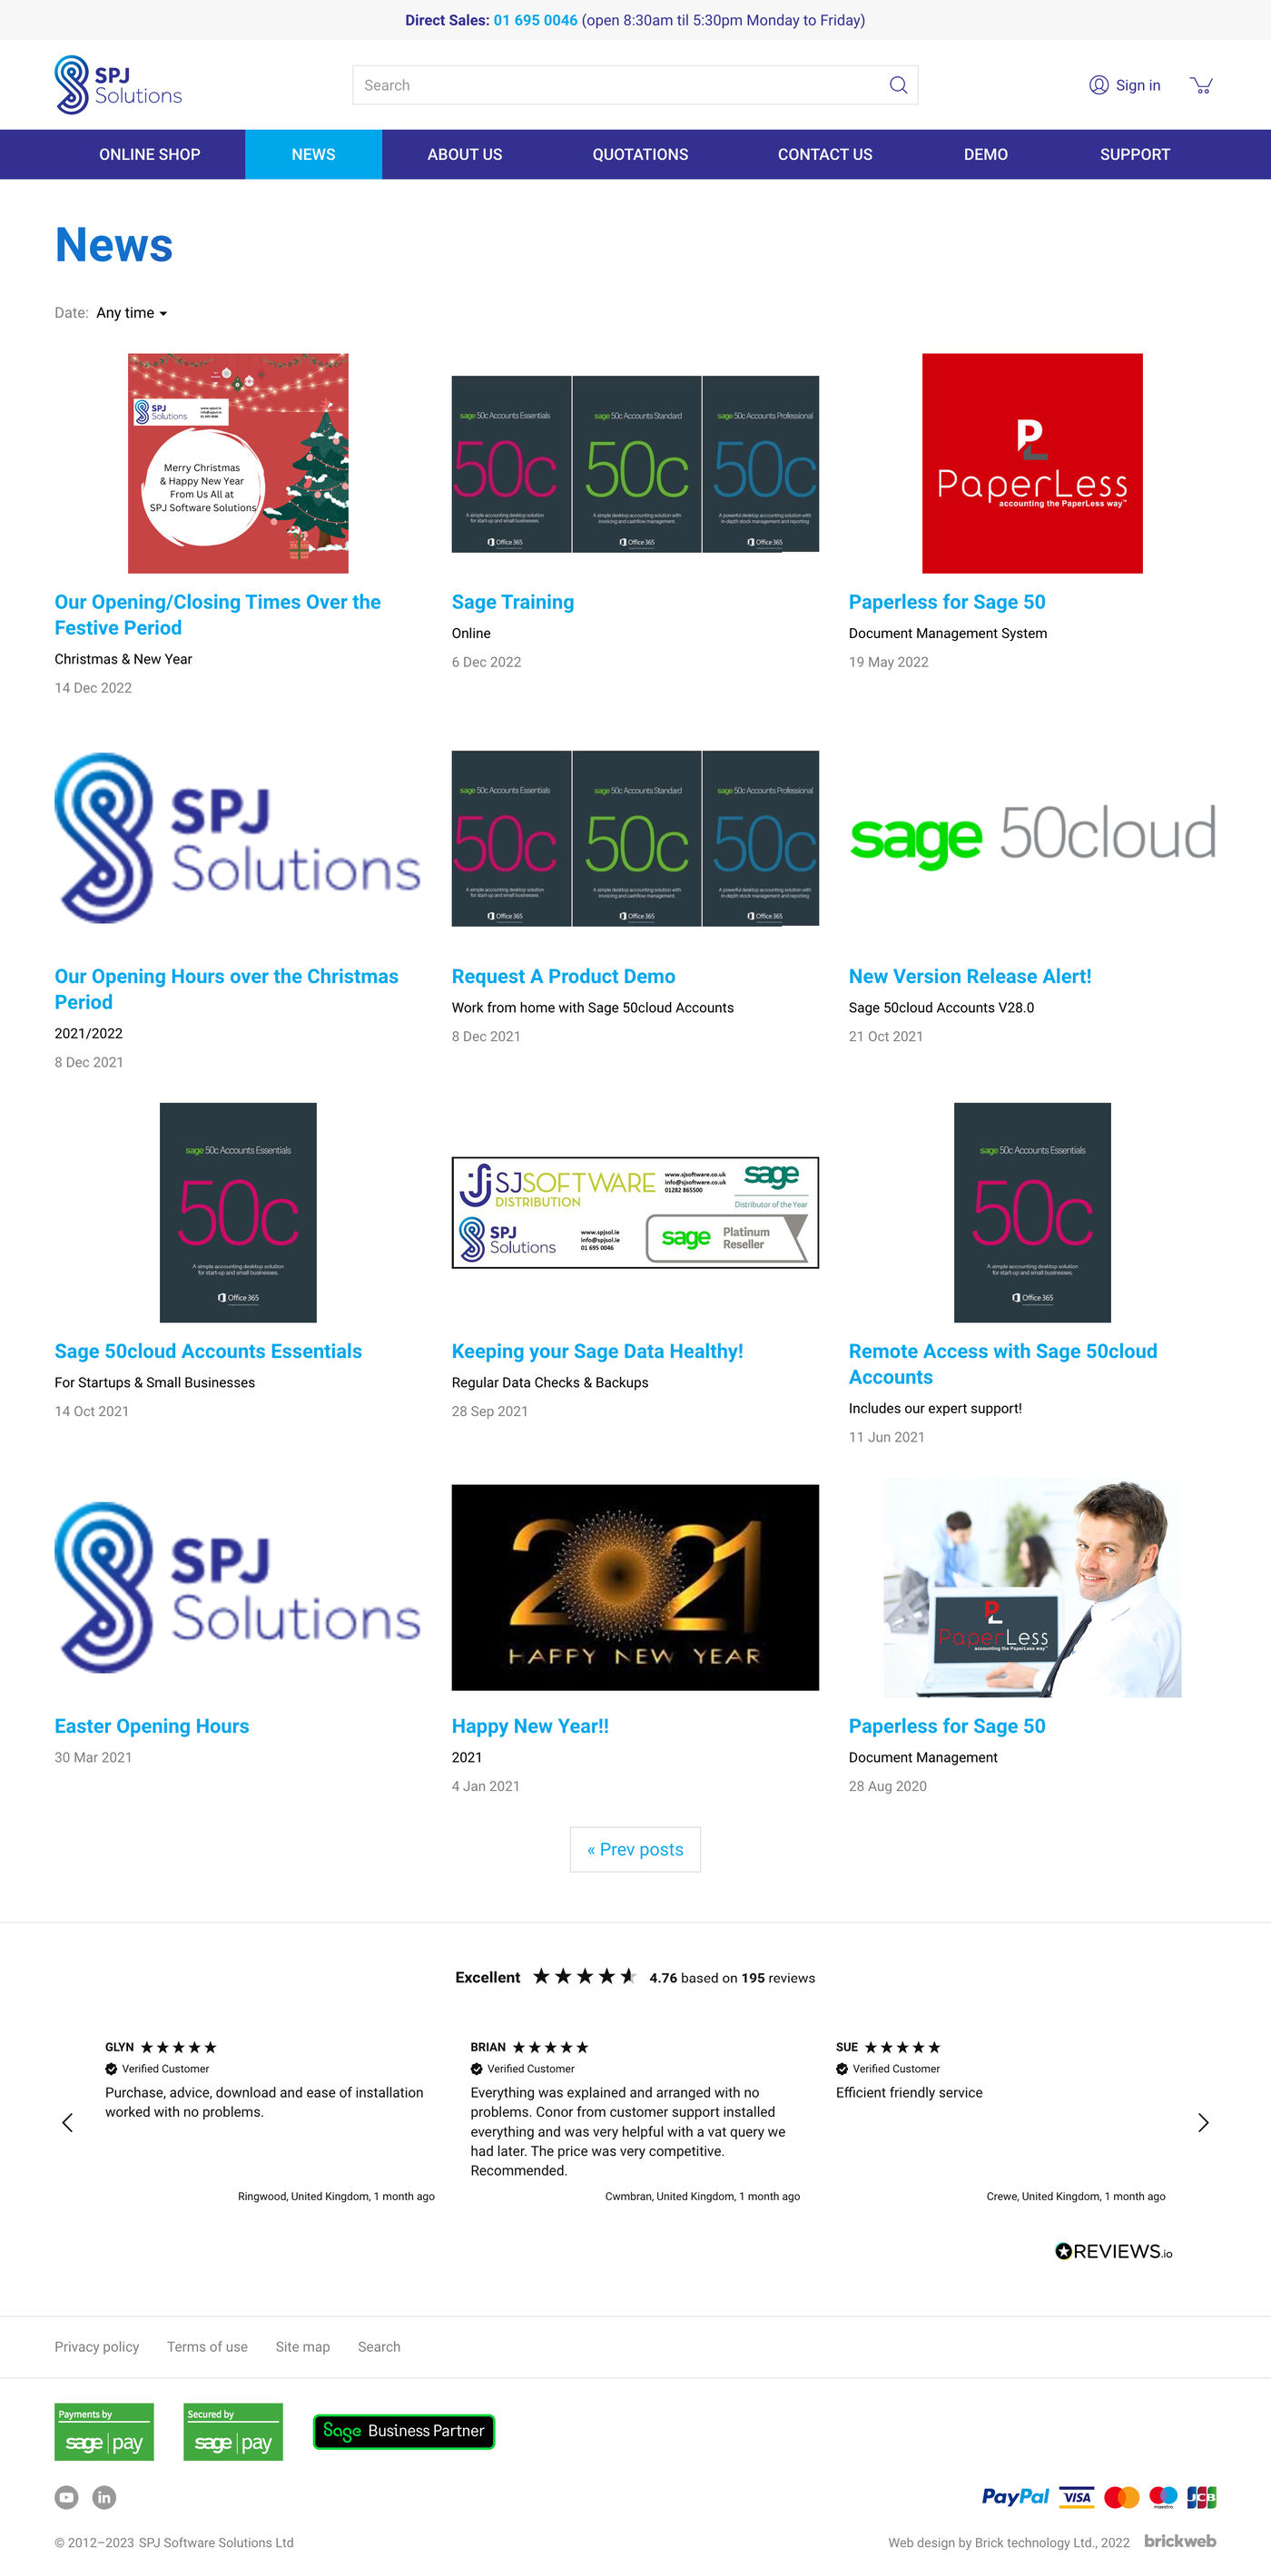 SPJ Solutions News